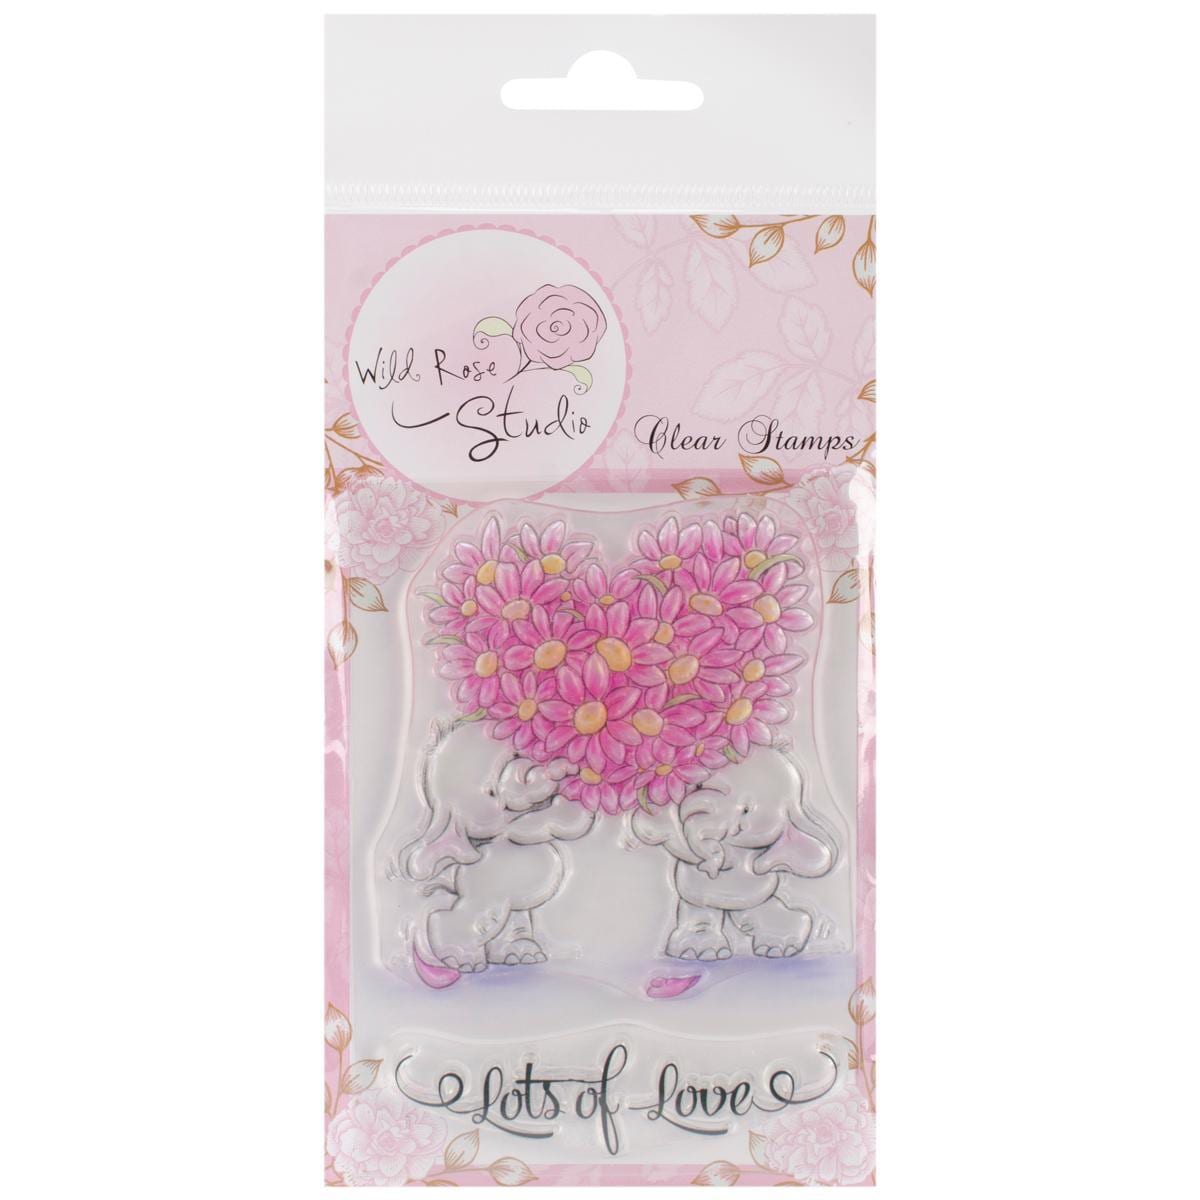 Wild Rose Studio Ltd. Clear Stamp   Flower Heart